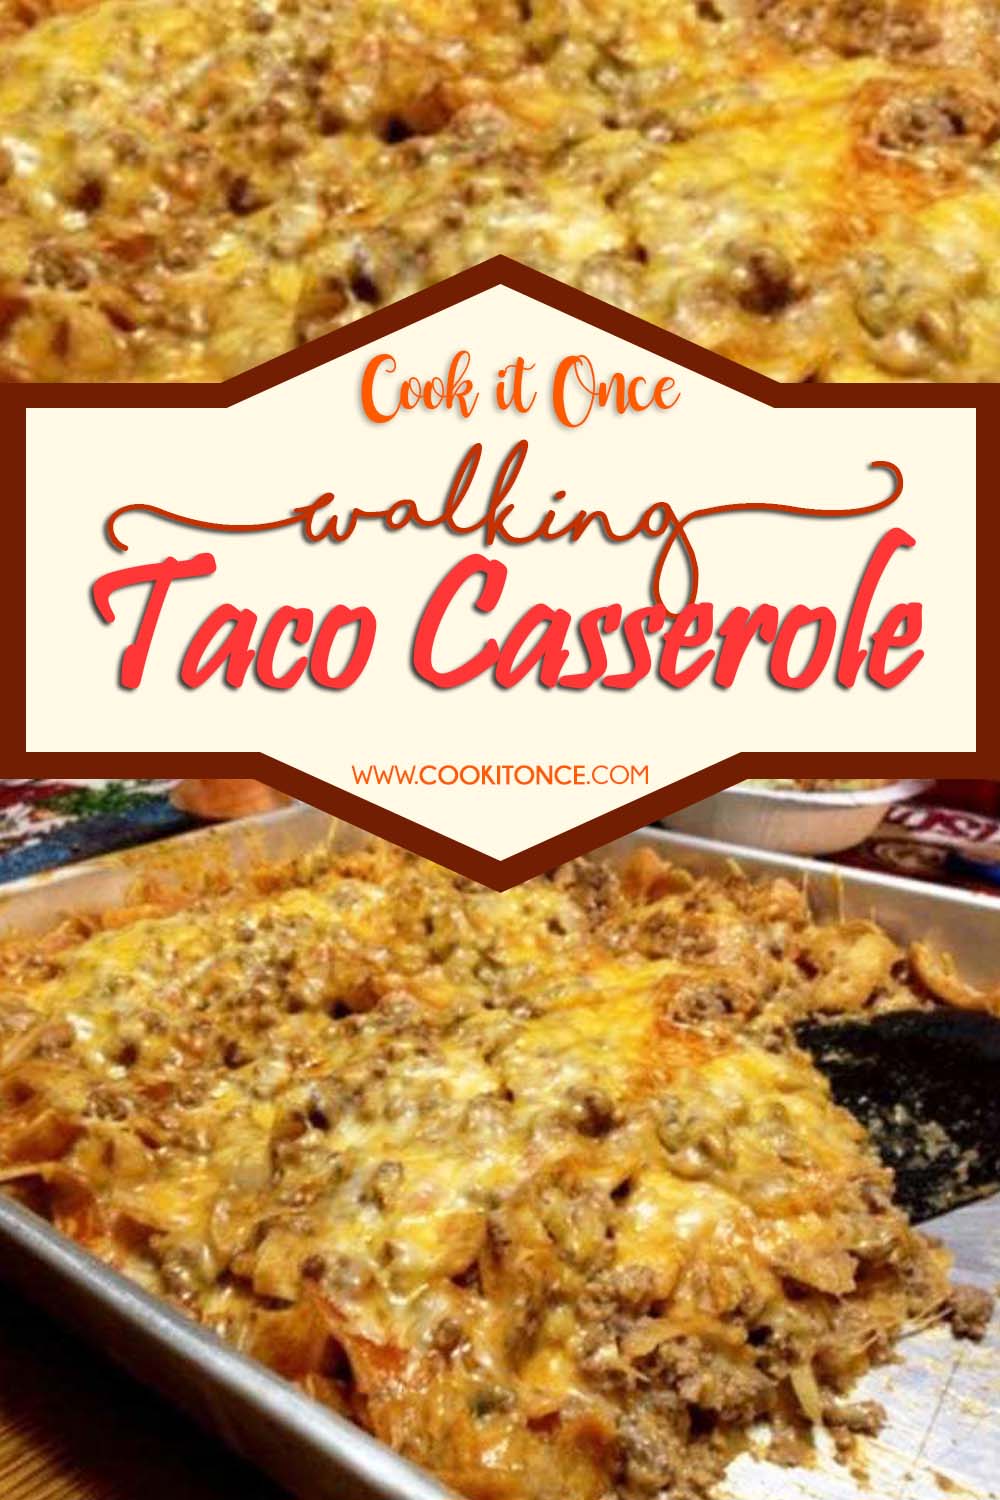 Taco Casserole Recipe